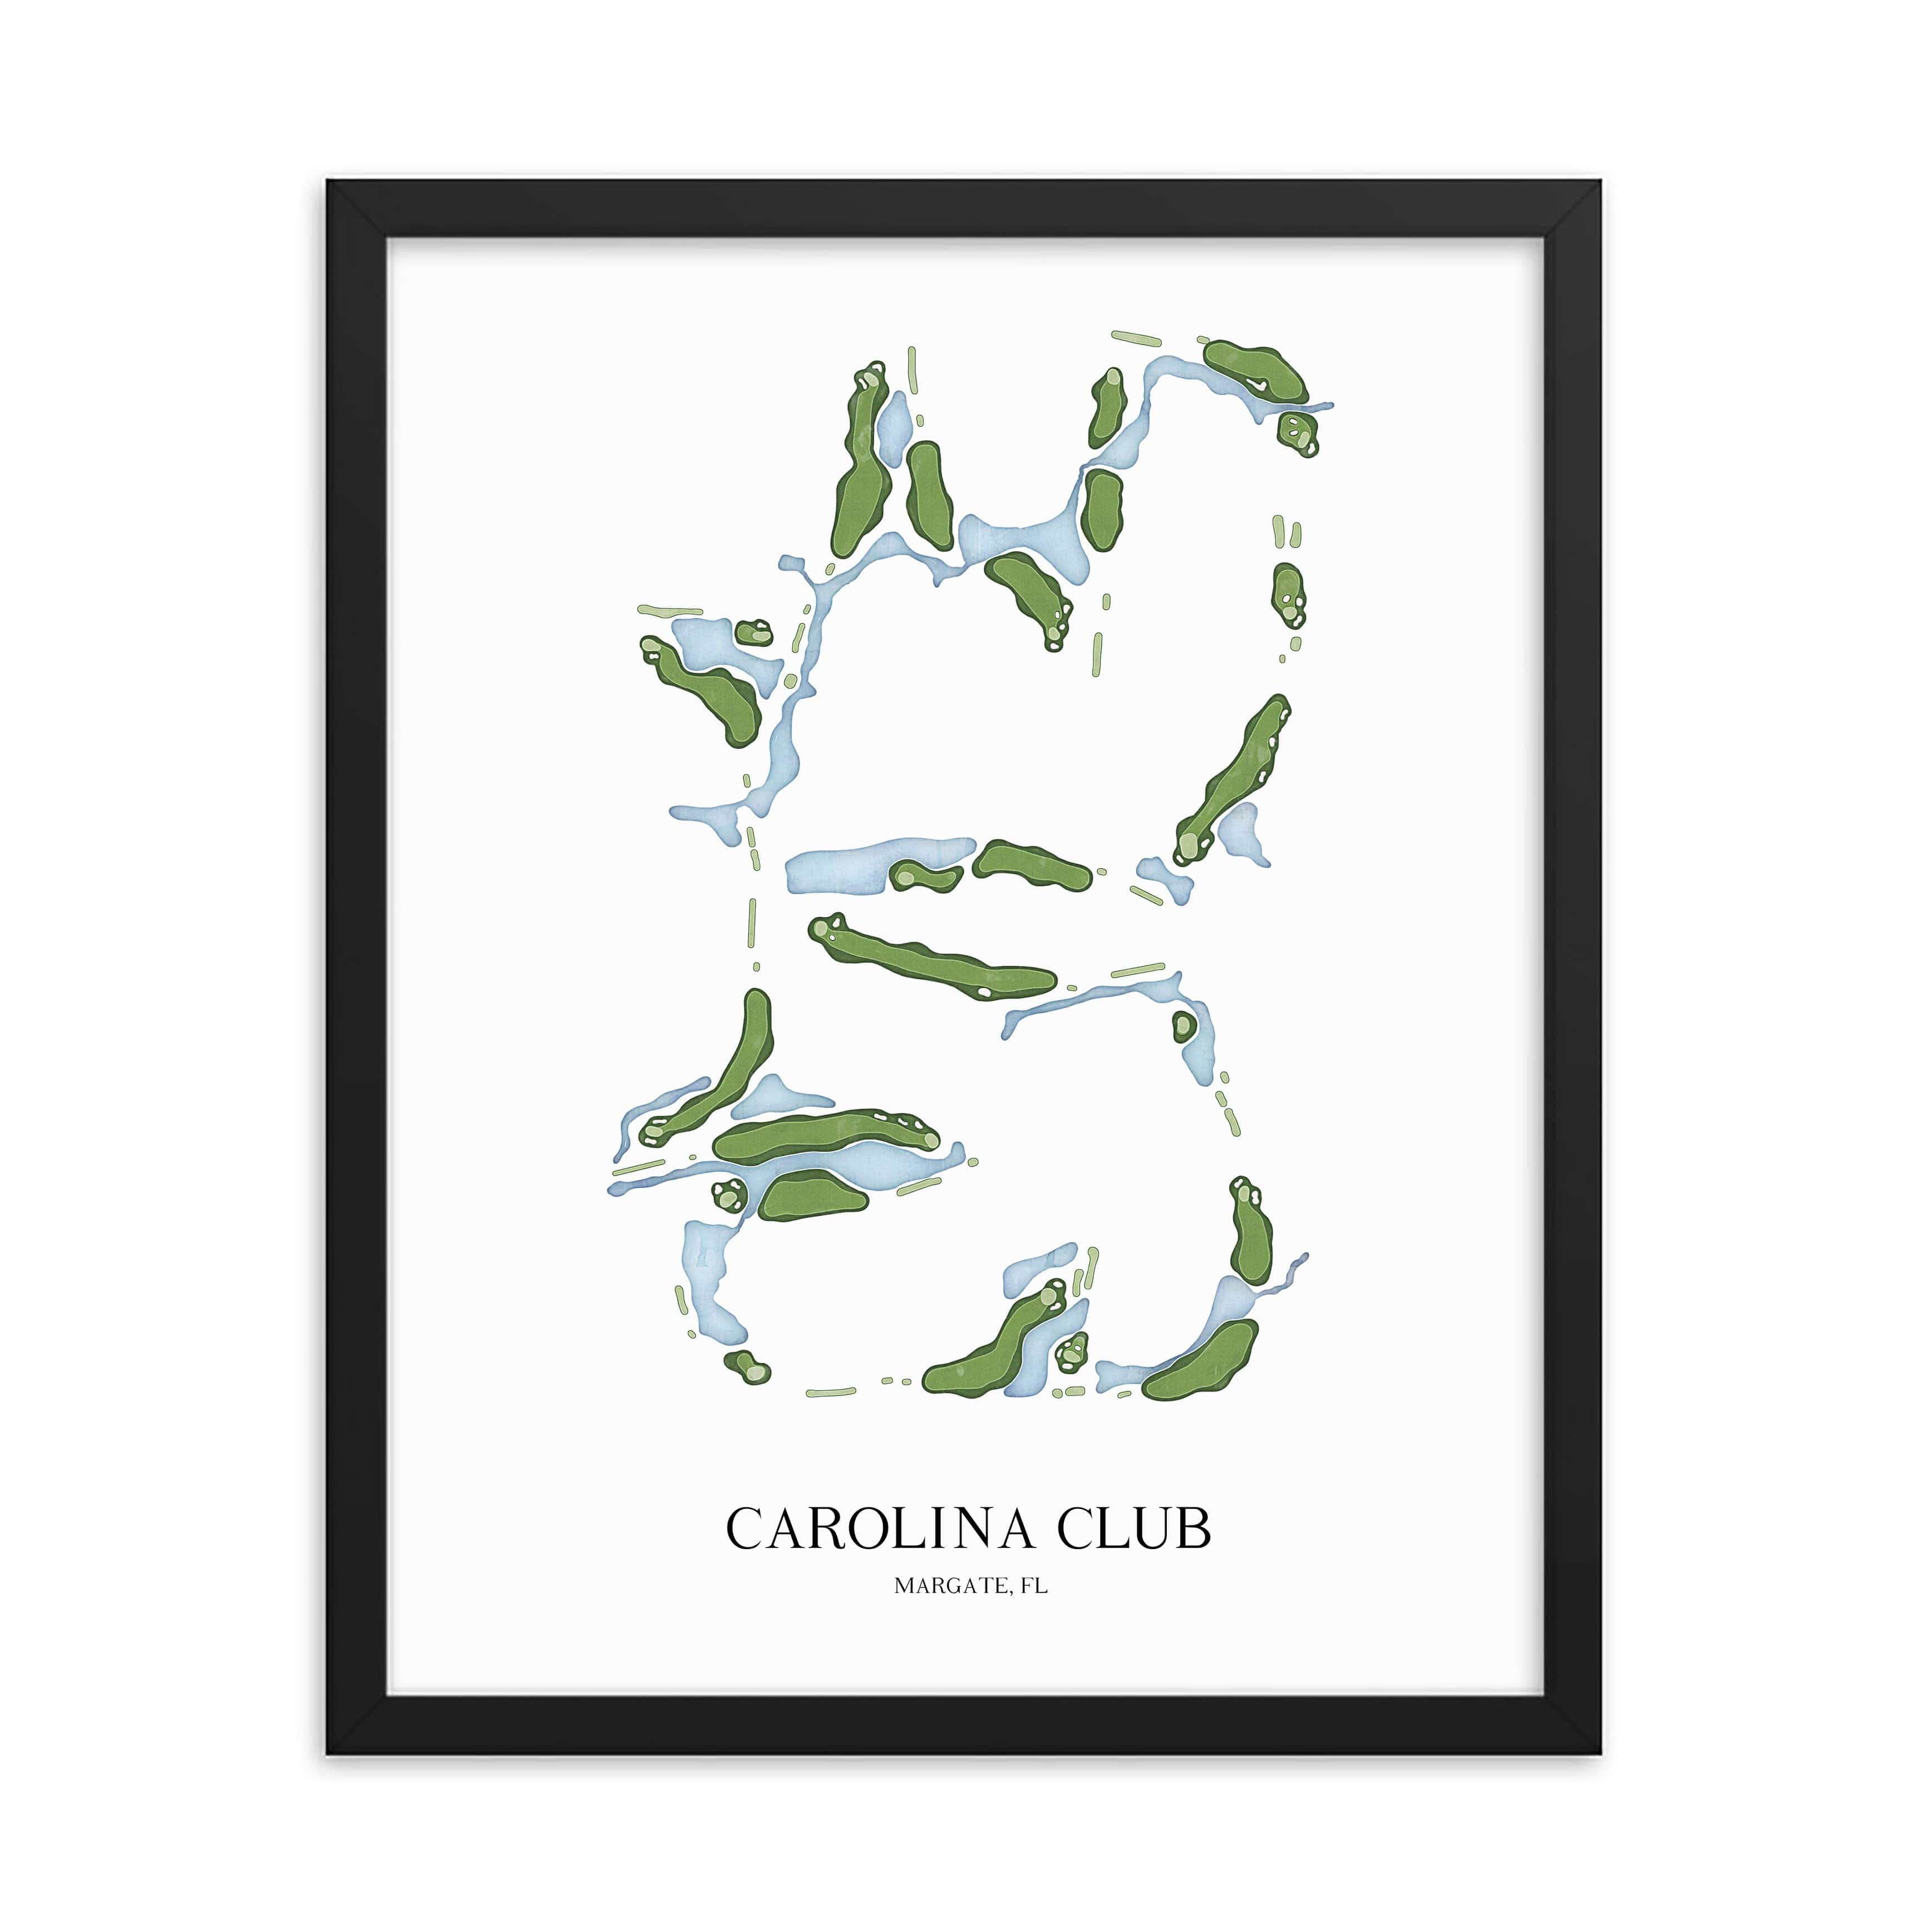 The 19th Hole Golf Shop - Golf Course Prints -  The Carolina Club Golf Course Map